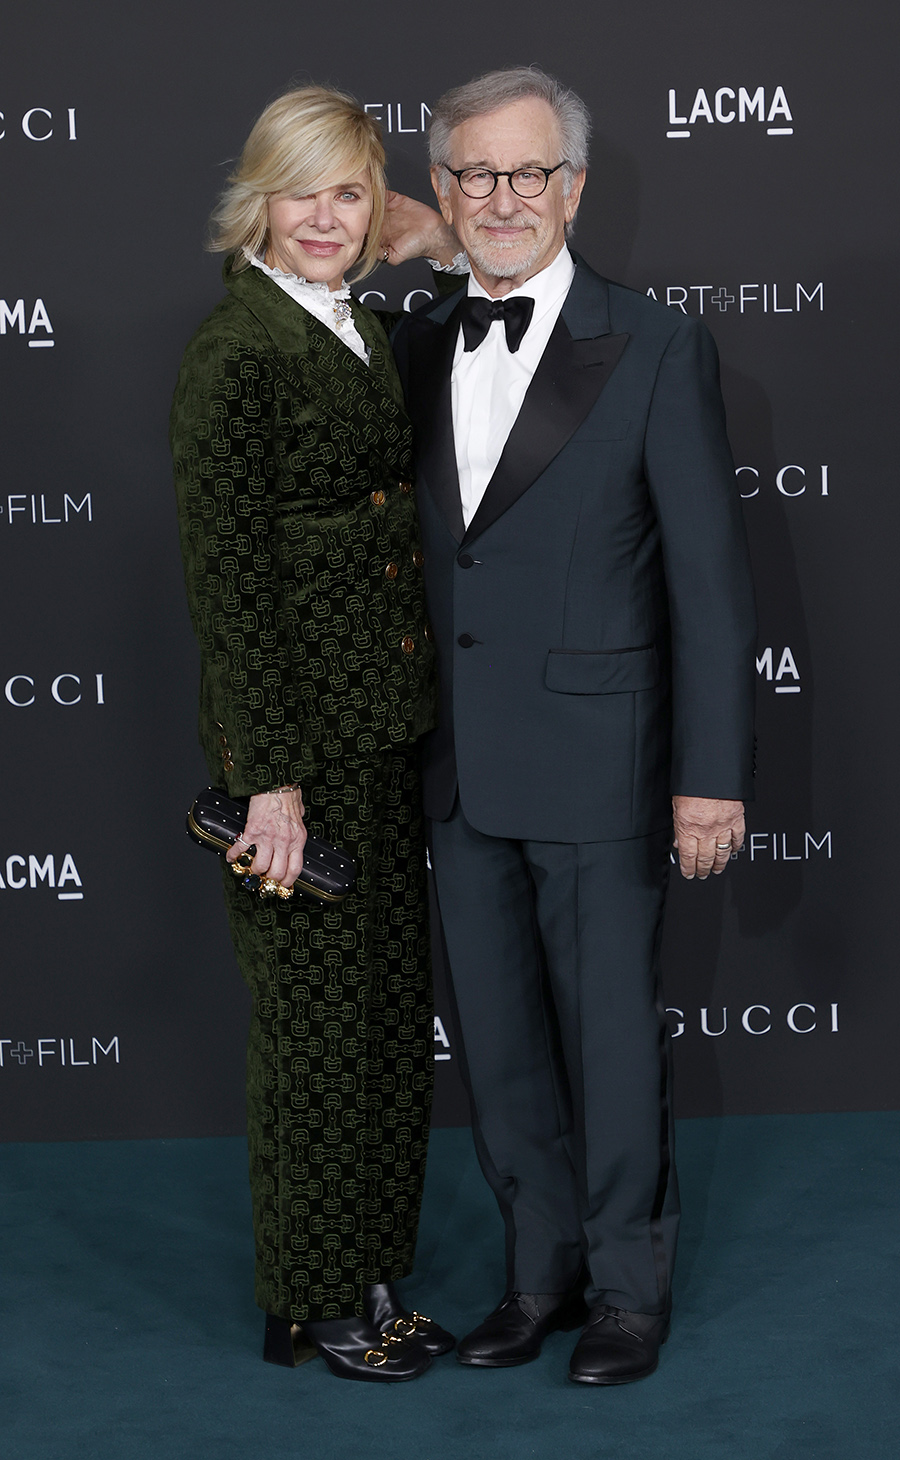 звезды платья наряды LACMA Art + Film 2021 Стивен Спилберг жена Кейт Кэпшоу